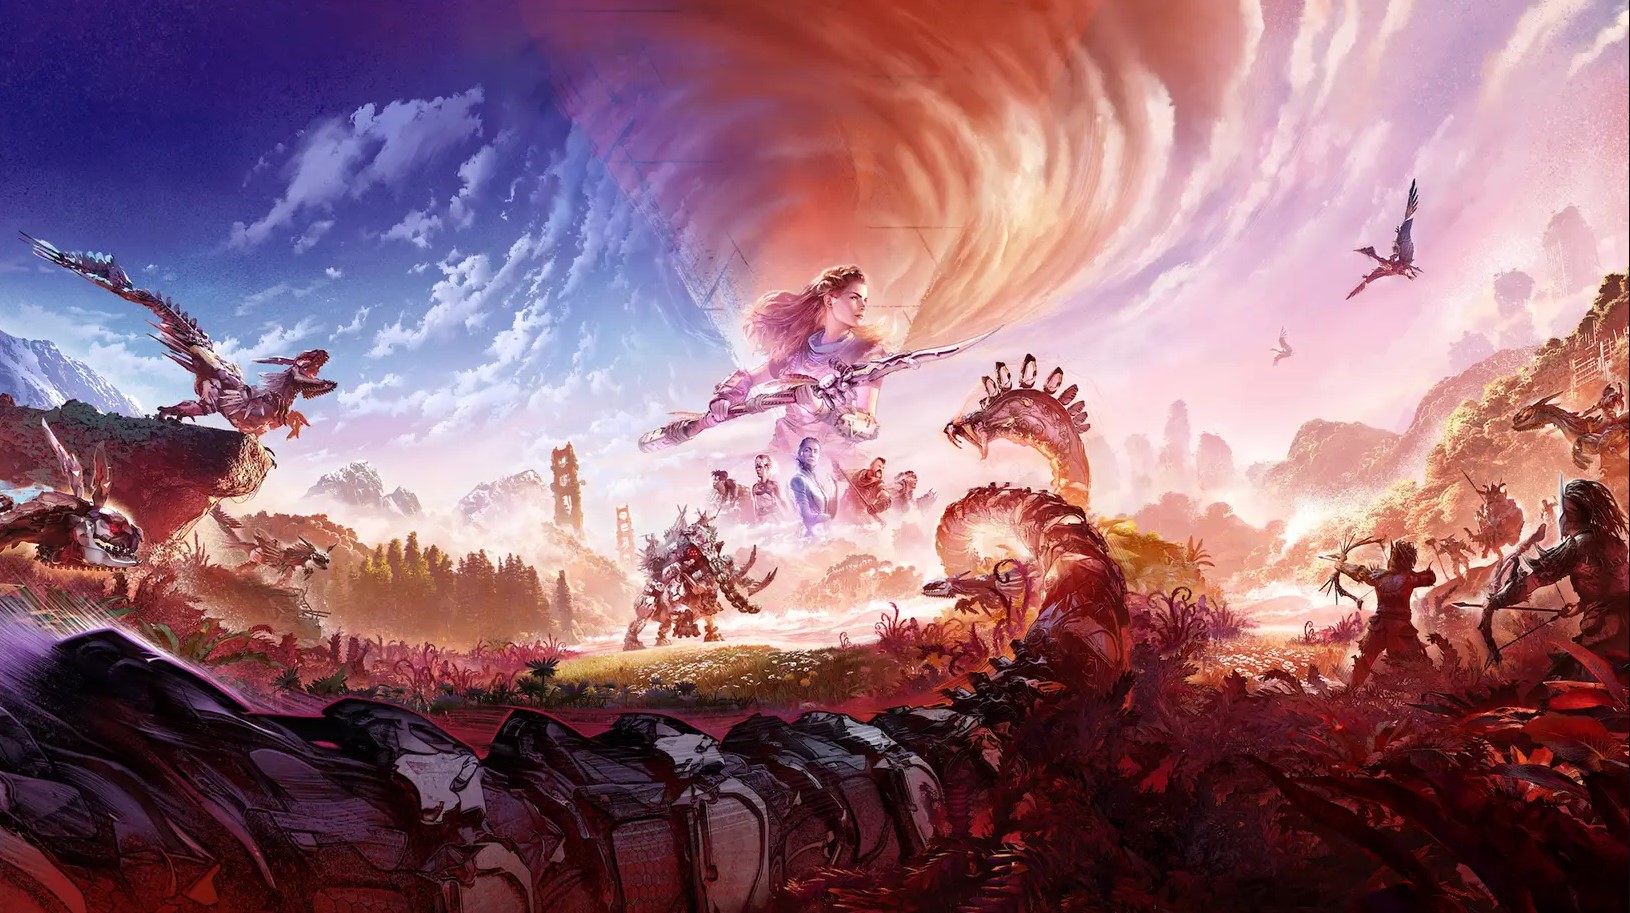 Will Horizon Forbidden West Come to PC? - Gameranx